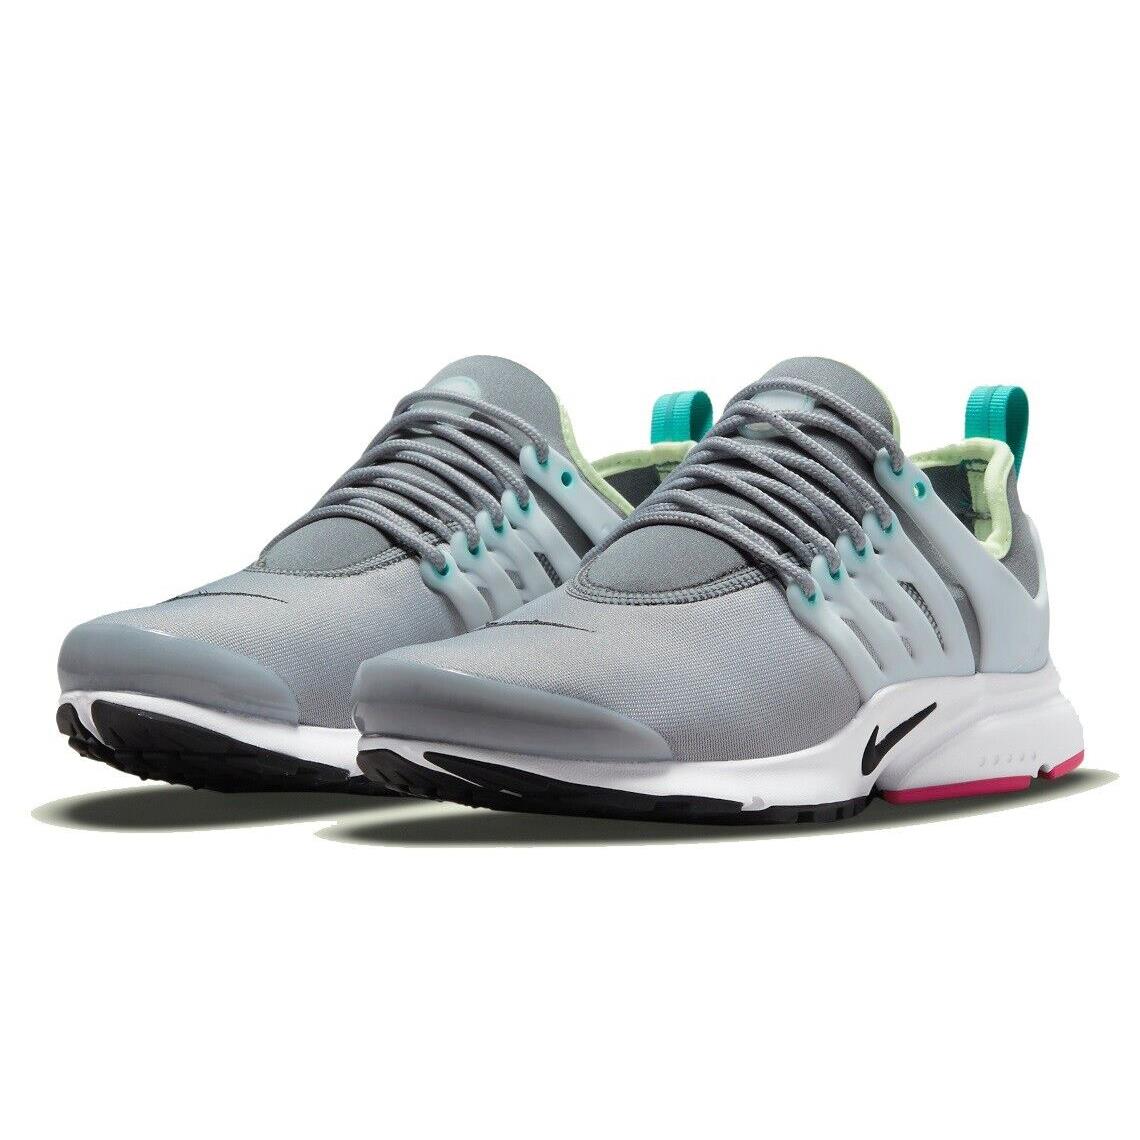 Nike Air Presto Womens Size 10 Sneaker Shoes 878068 018 Cool Grey